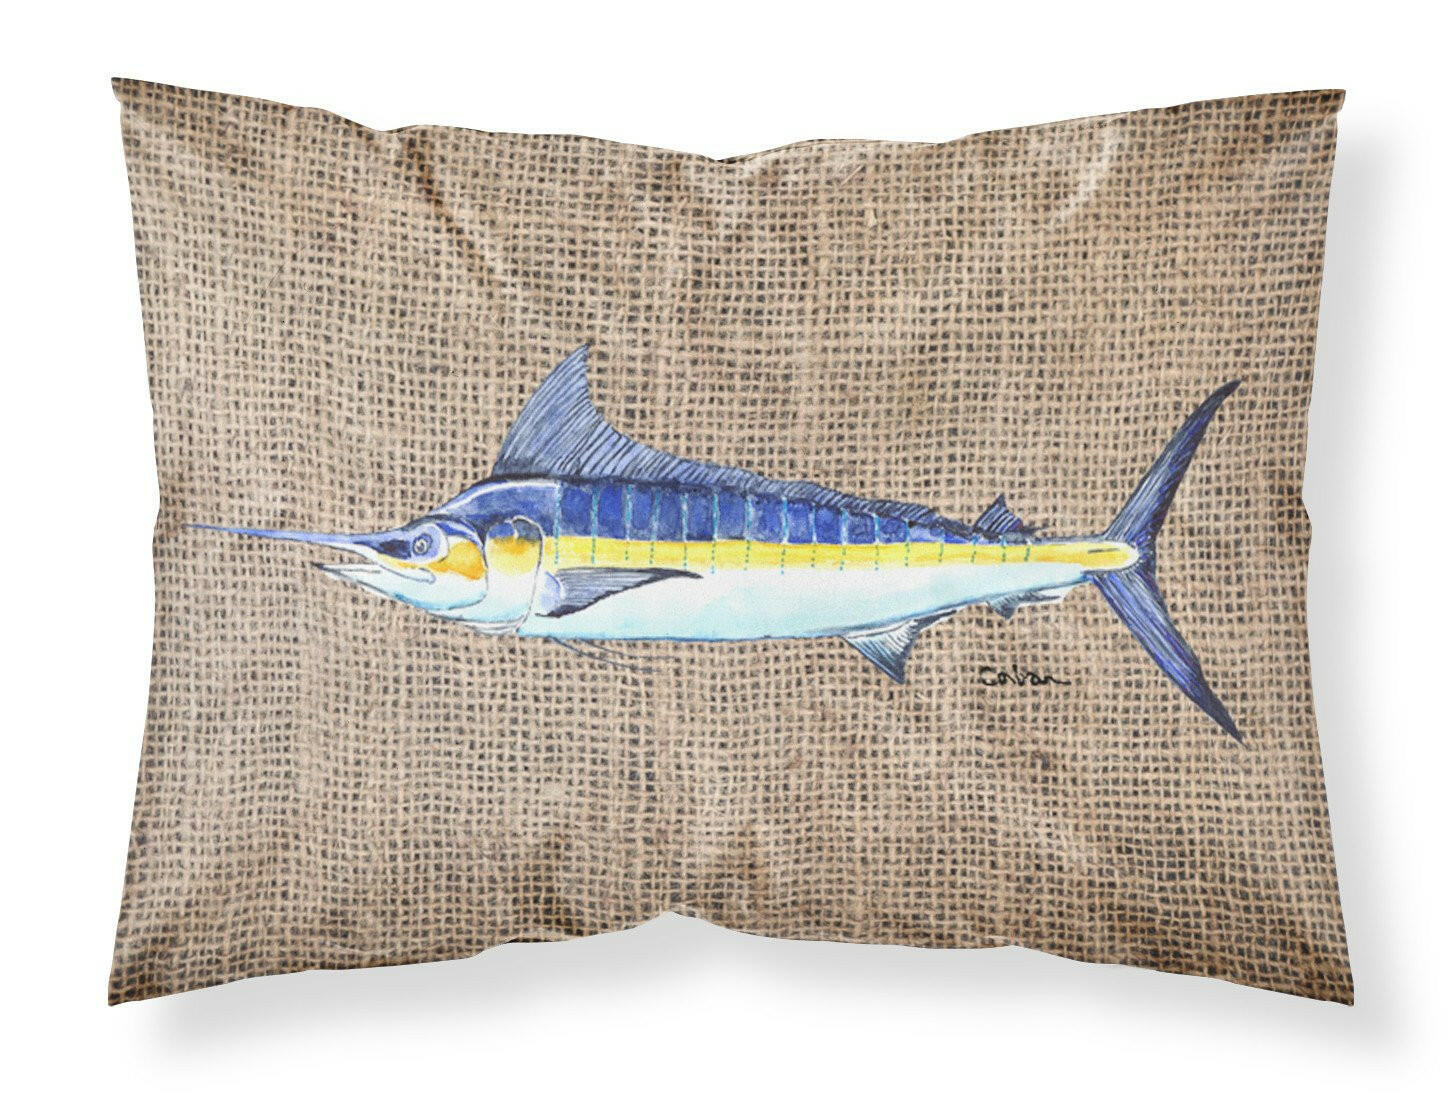 Fish - Marlin Moisture wicking Fabric standard pillowcase by Caroline's Treasures